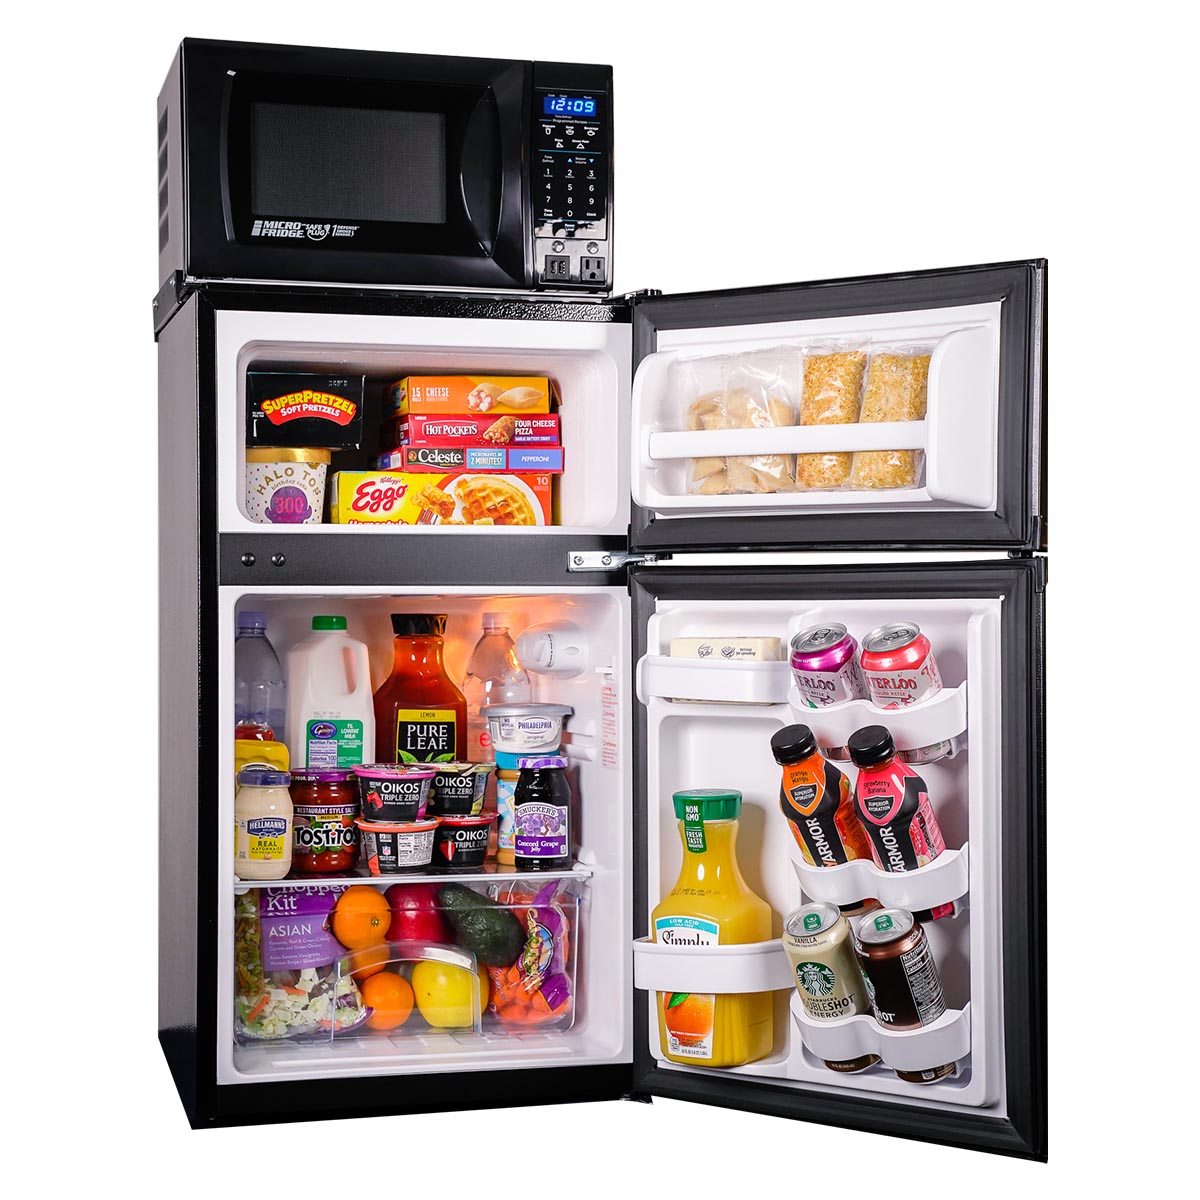 Microwave-freezer-fridge combo available for JMU residents, News